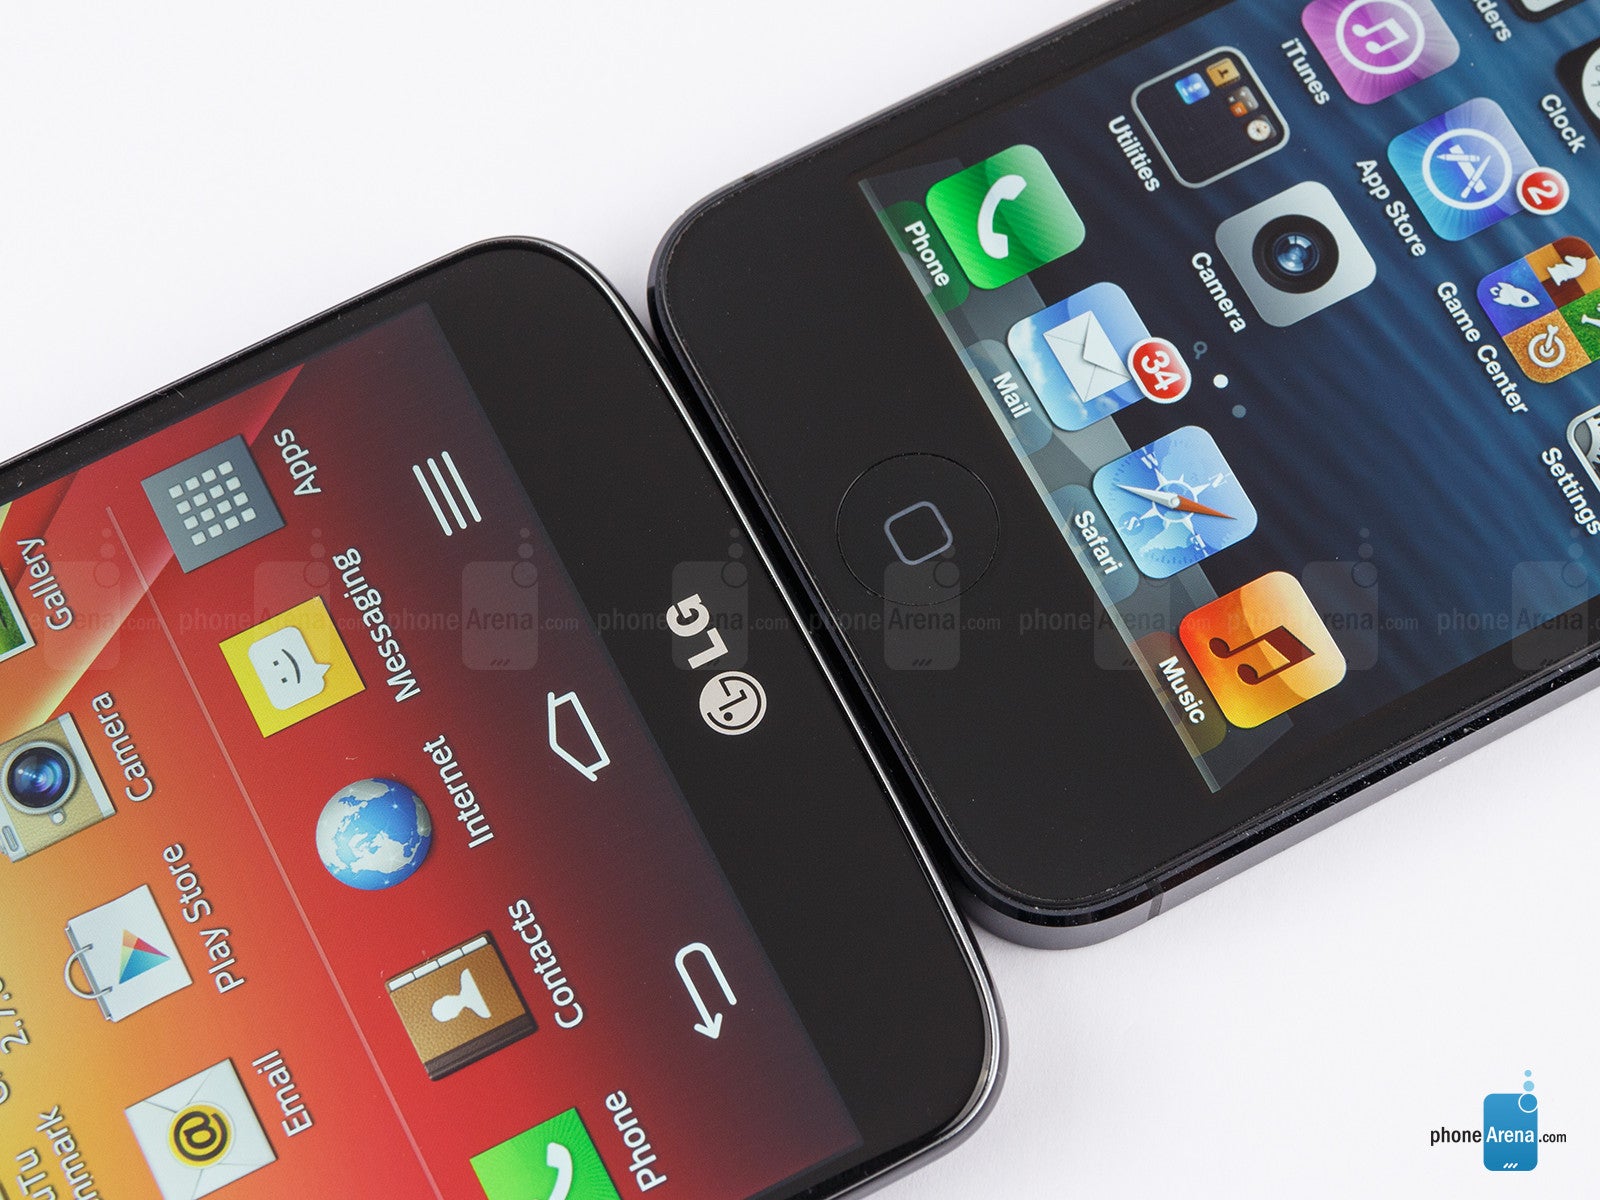 LG G2 vs Apple iPhone 5